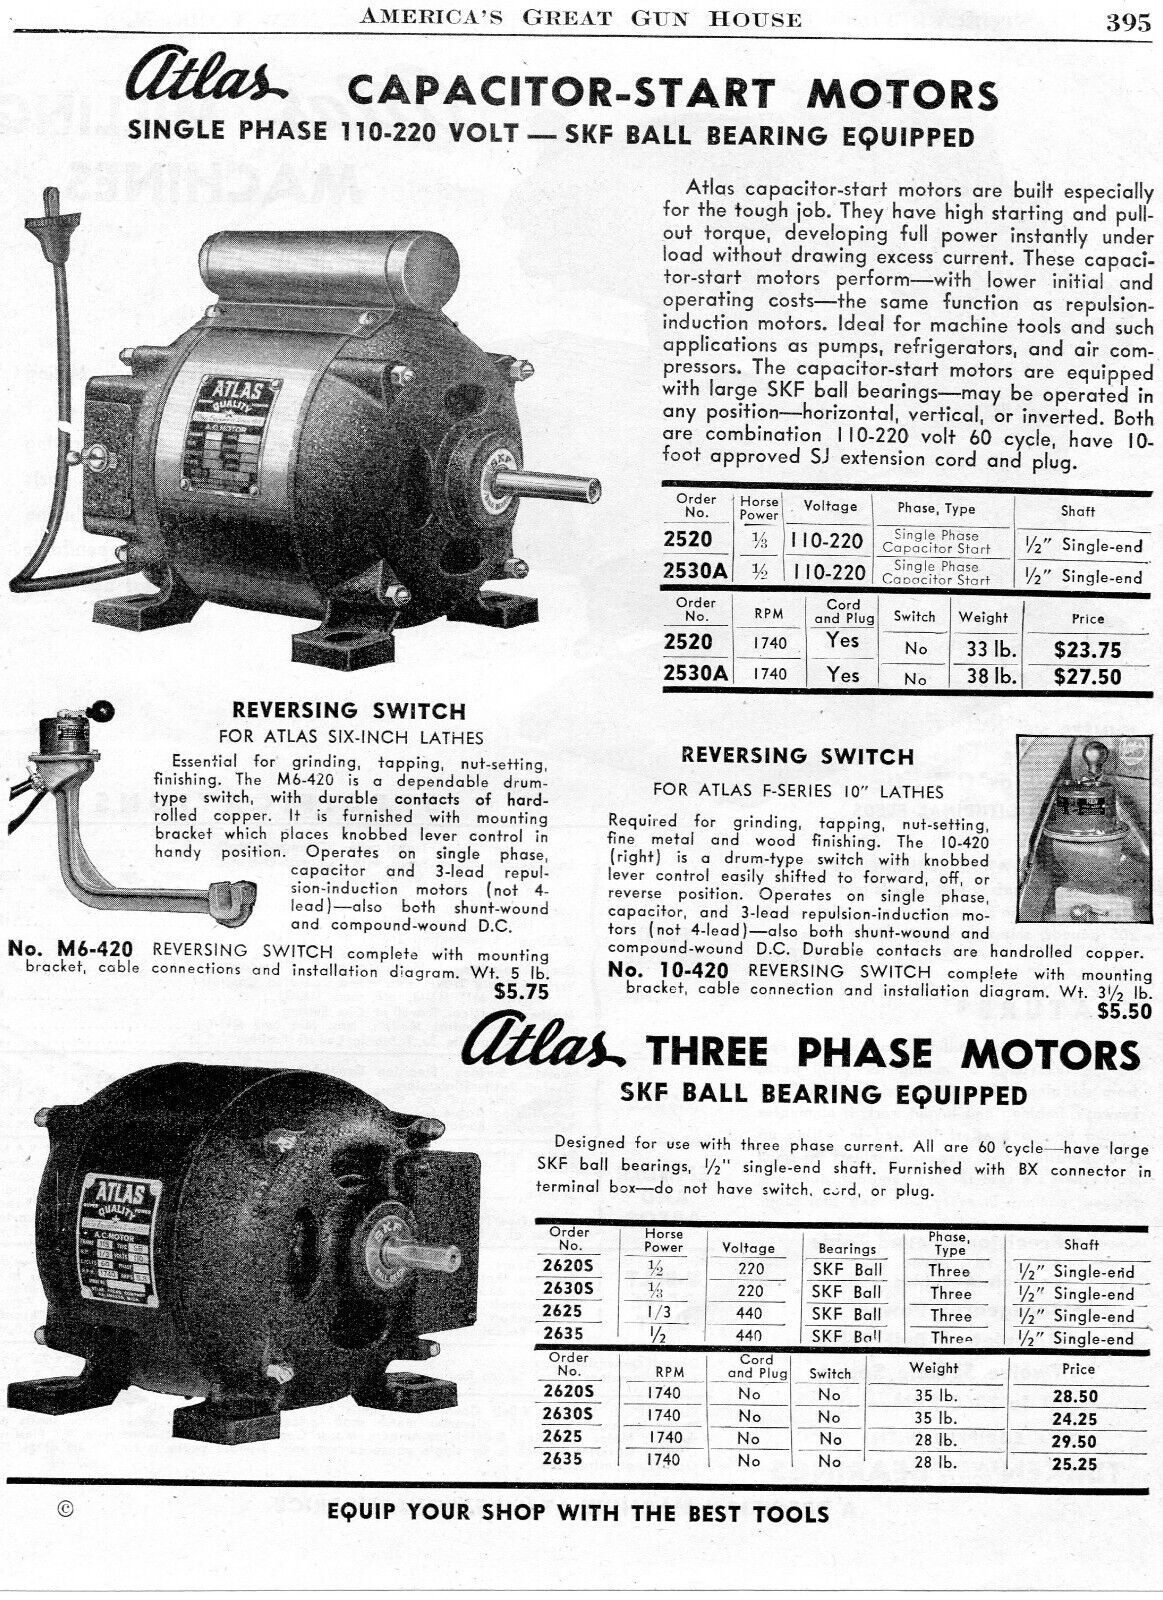 1946 Print Ad of Atlas Capacitor Start & Three Phase Motor